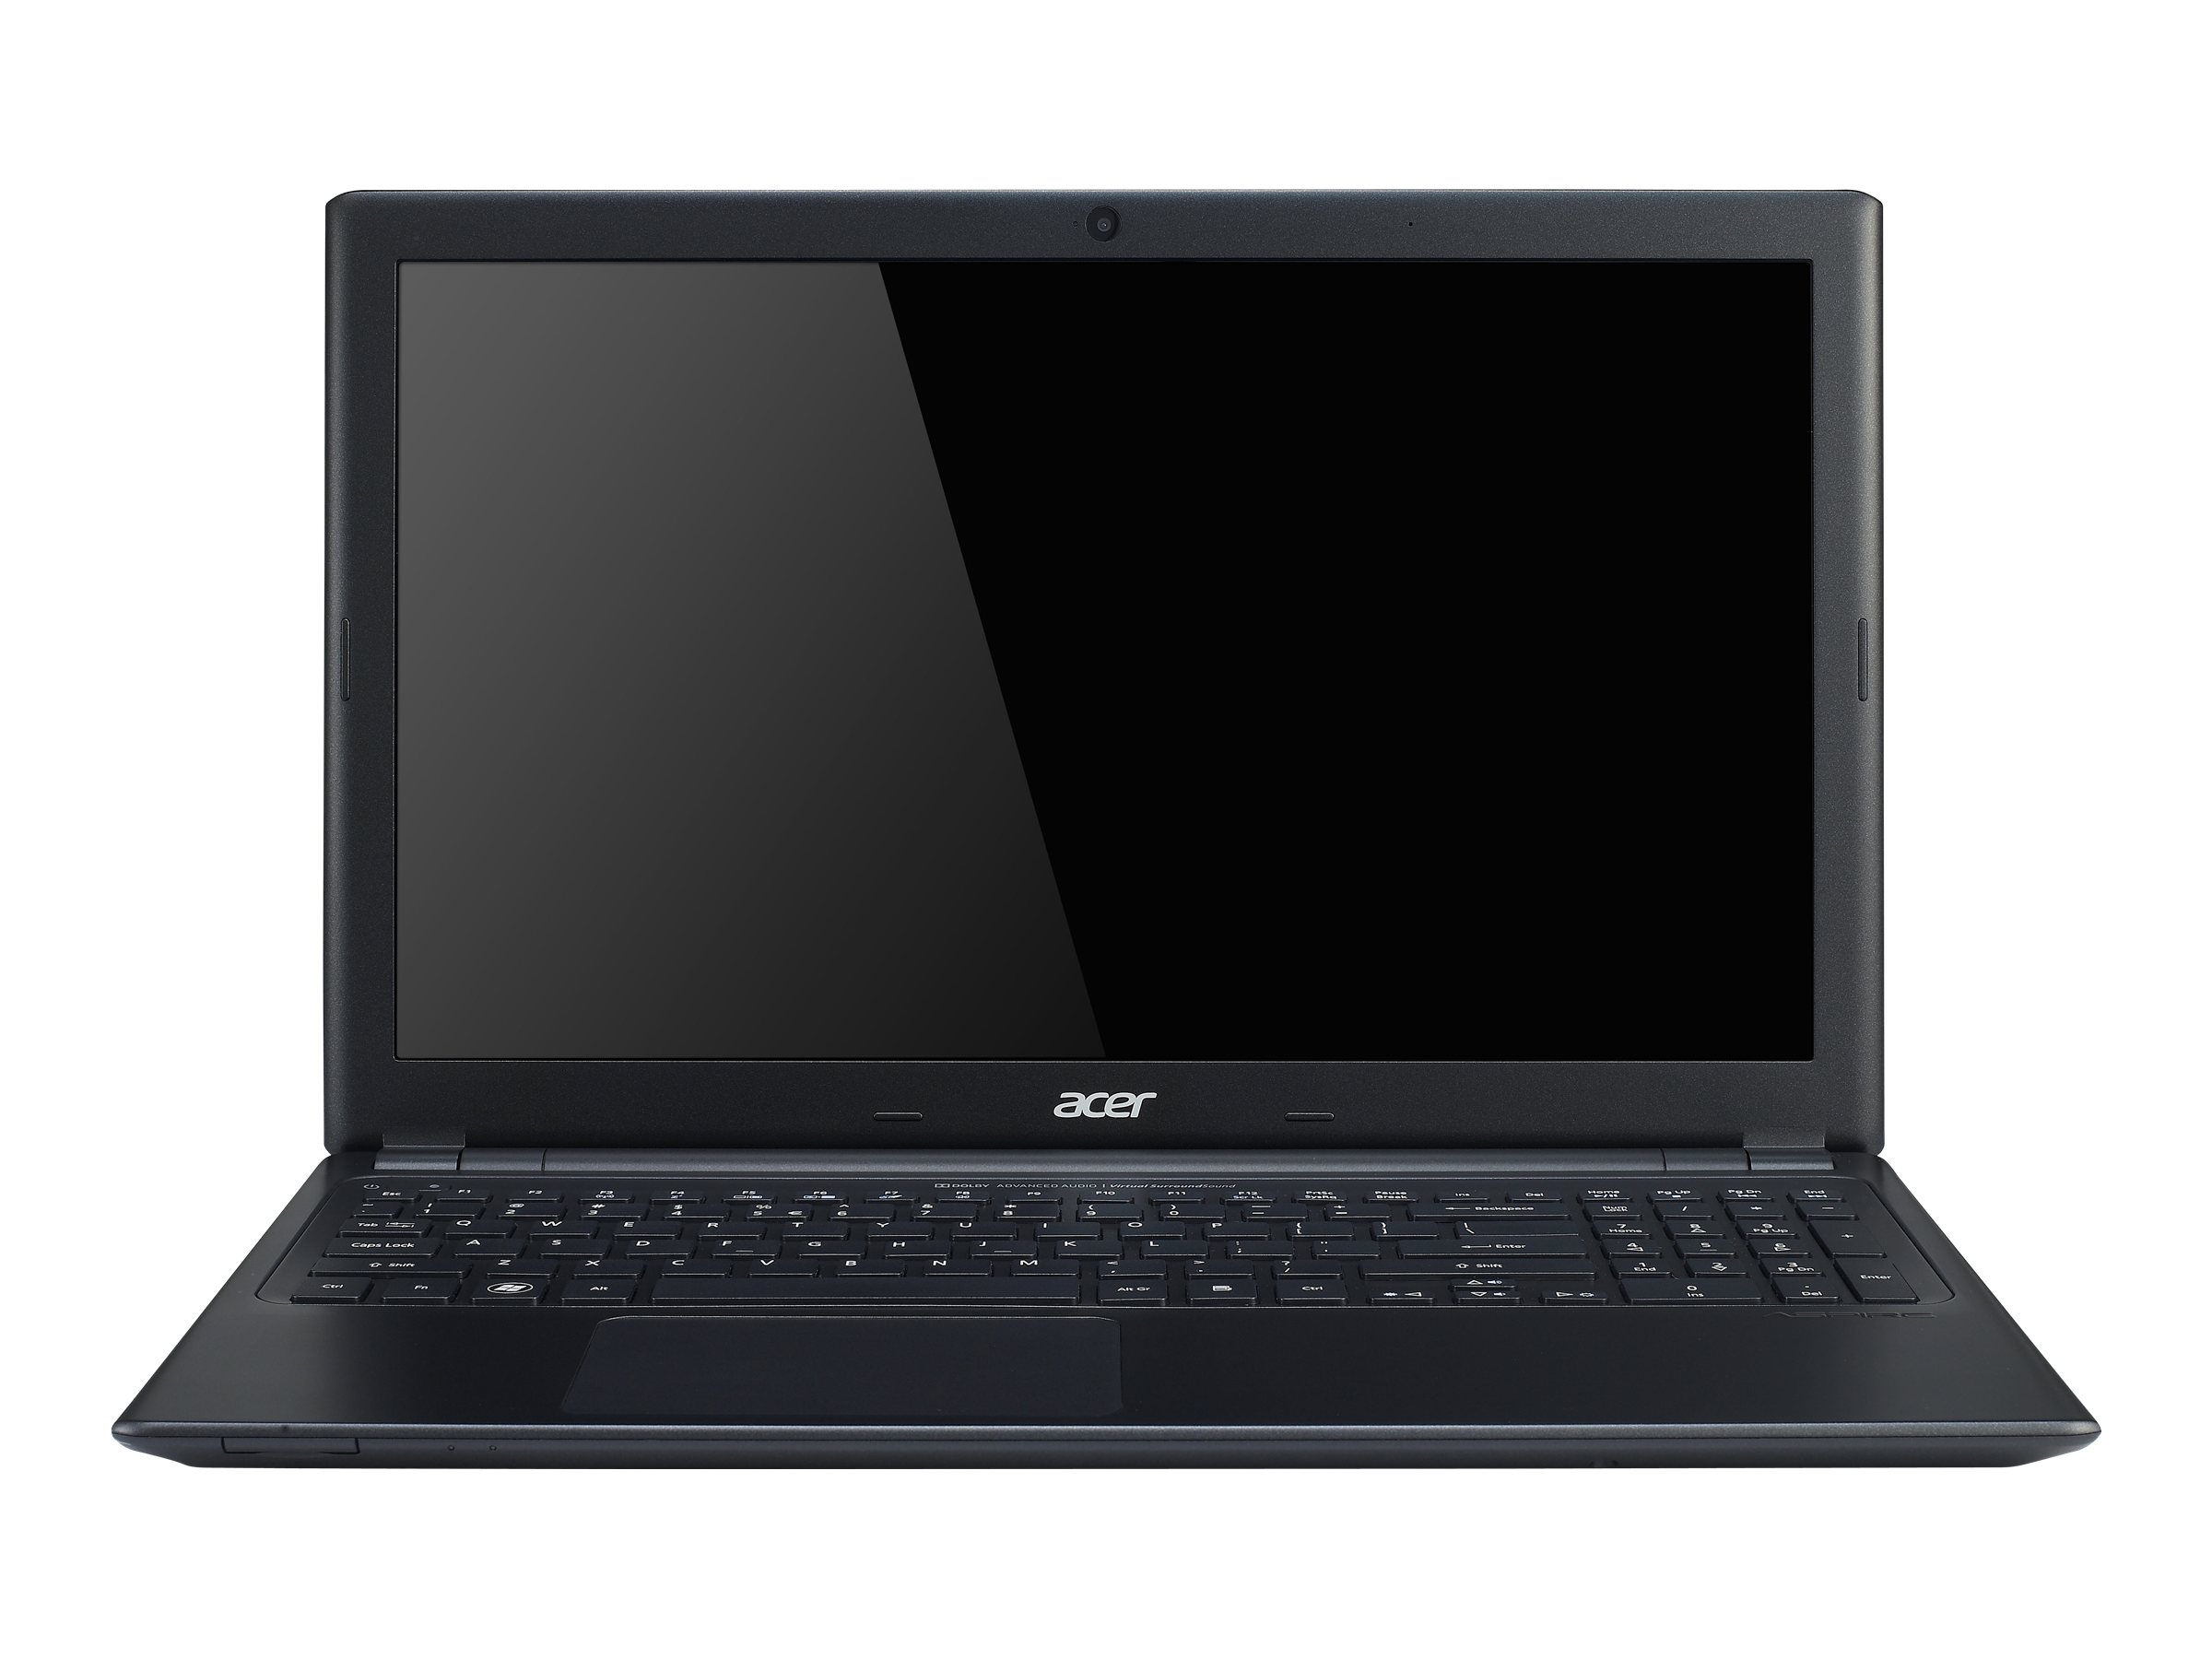 Acer Aspire V5 (571)